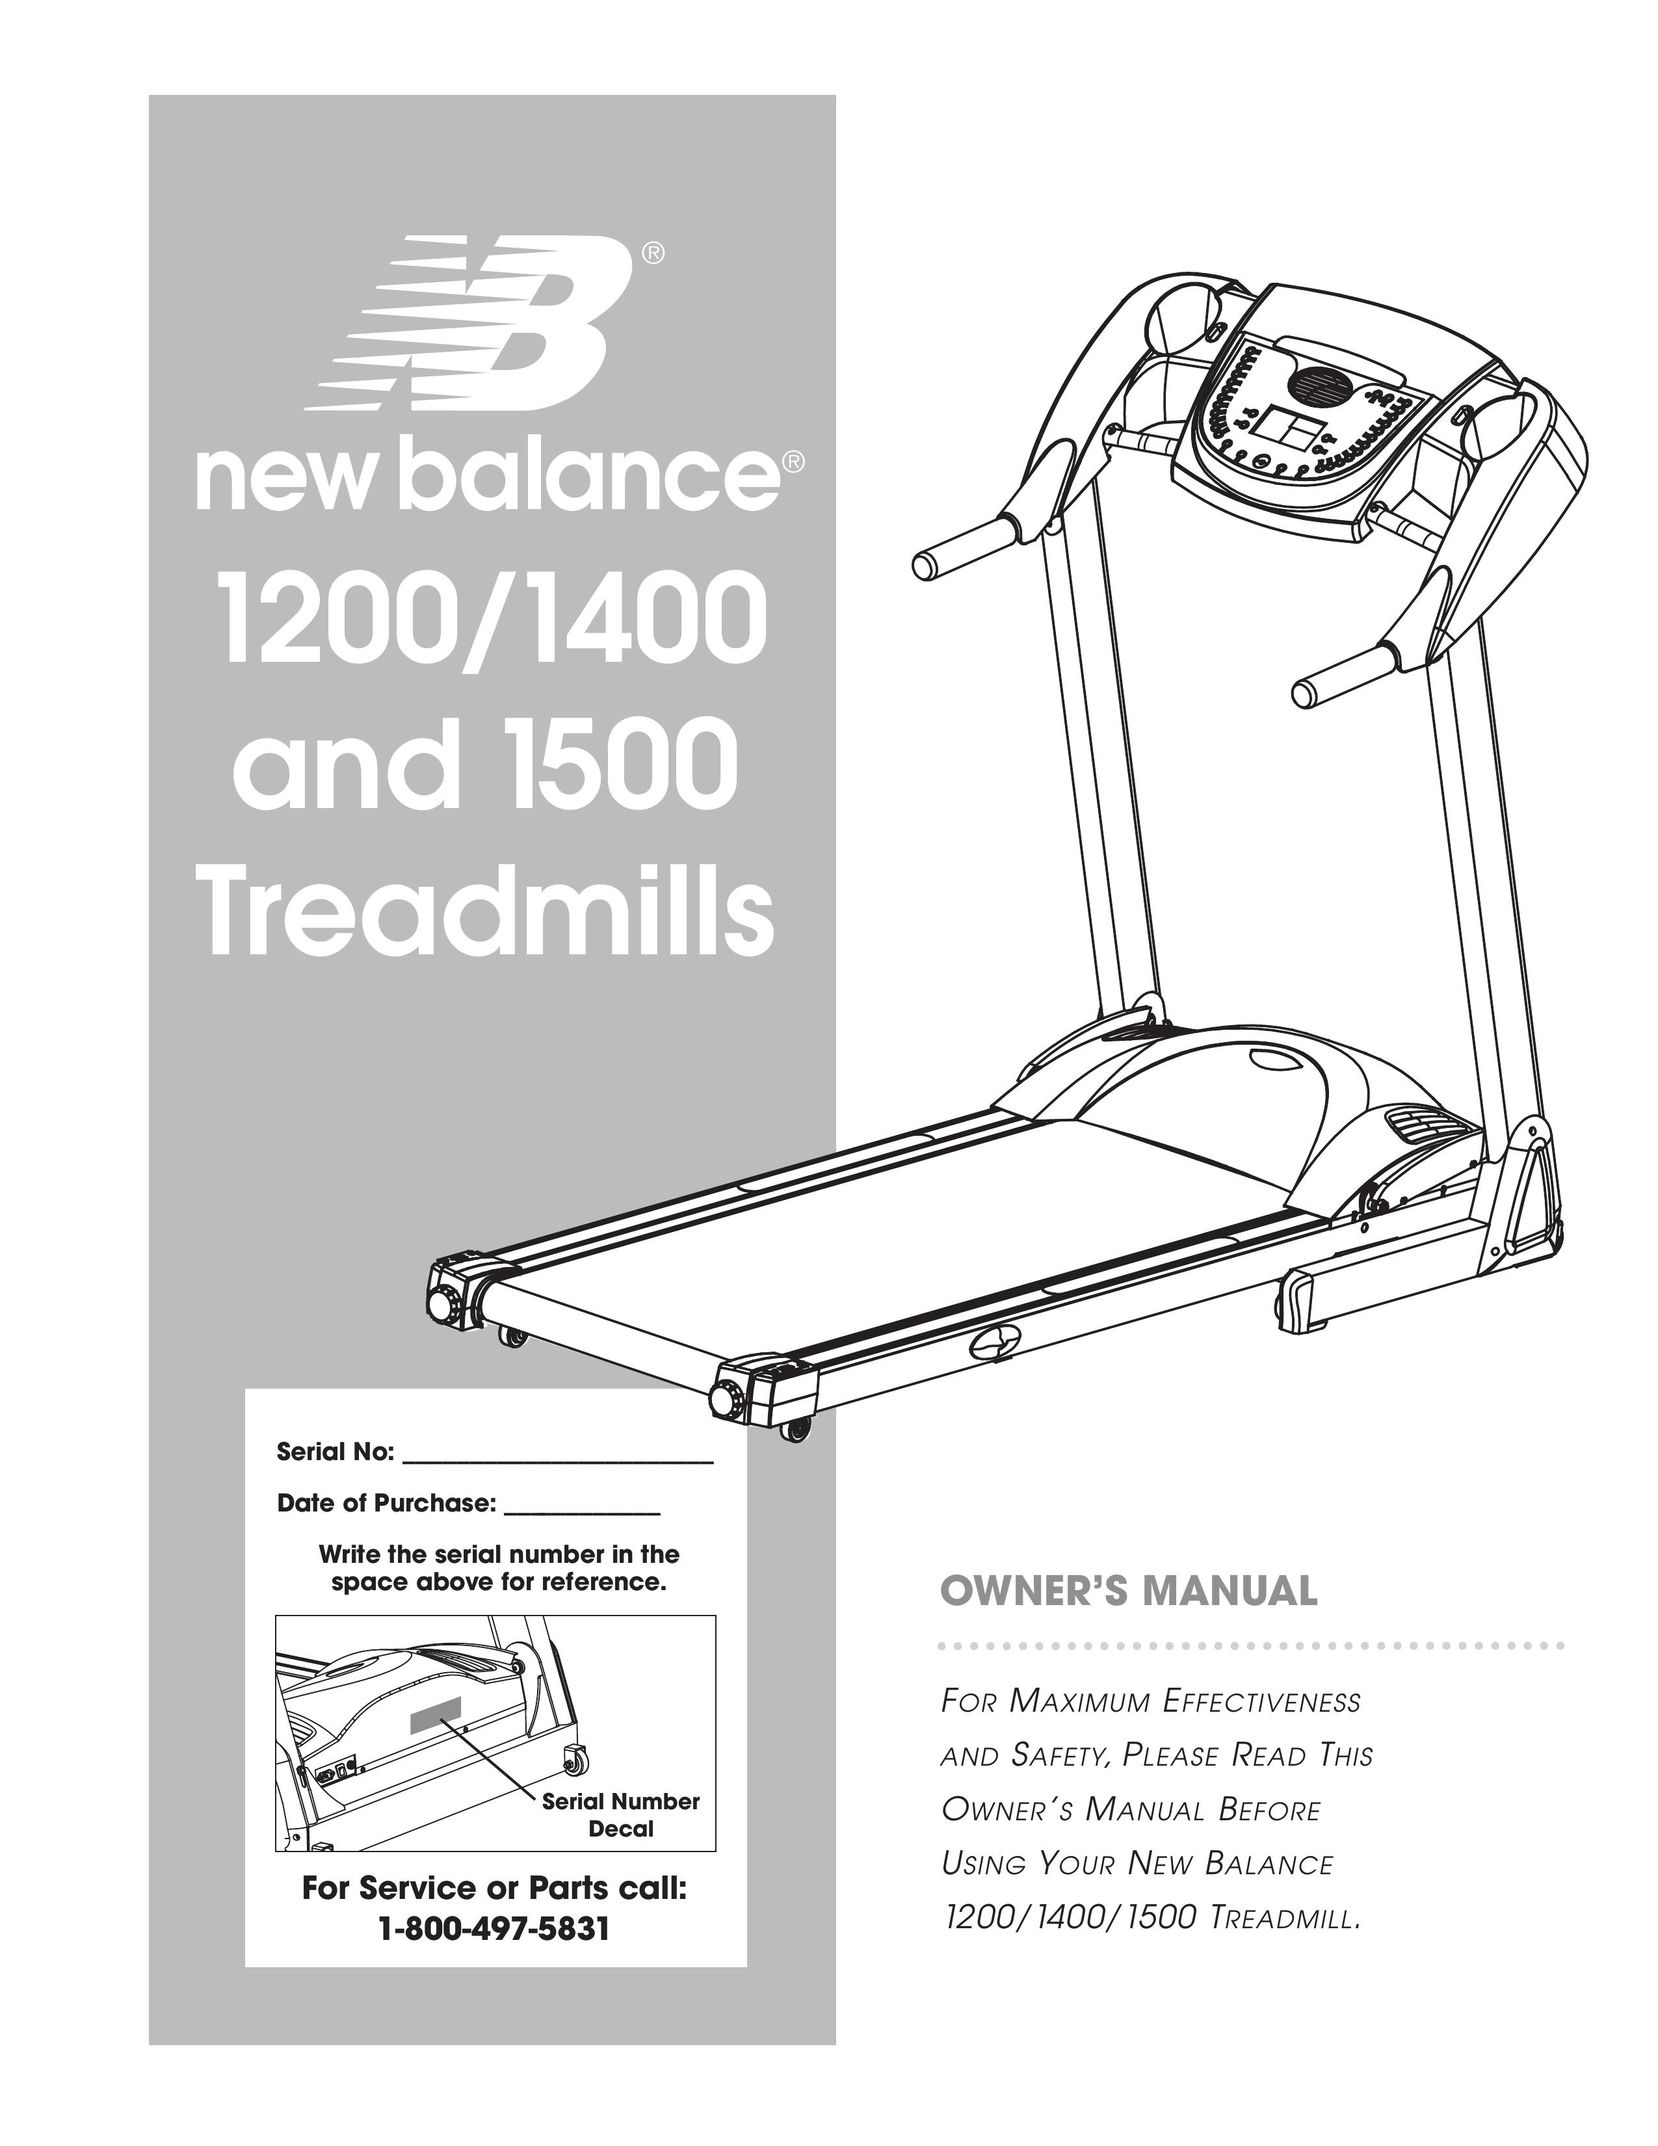 New Balance 1200, 1400, 1500 Treadmill User Manual